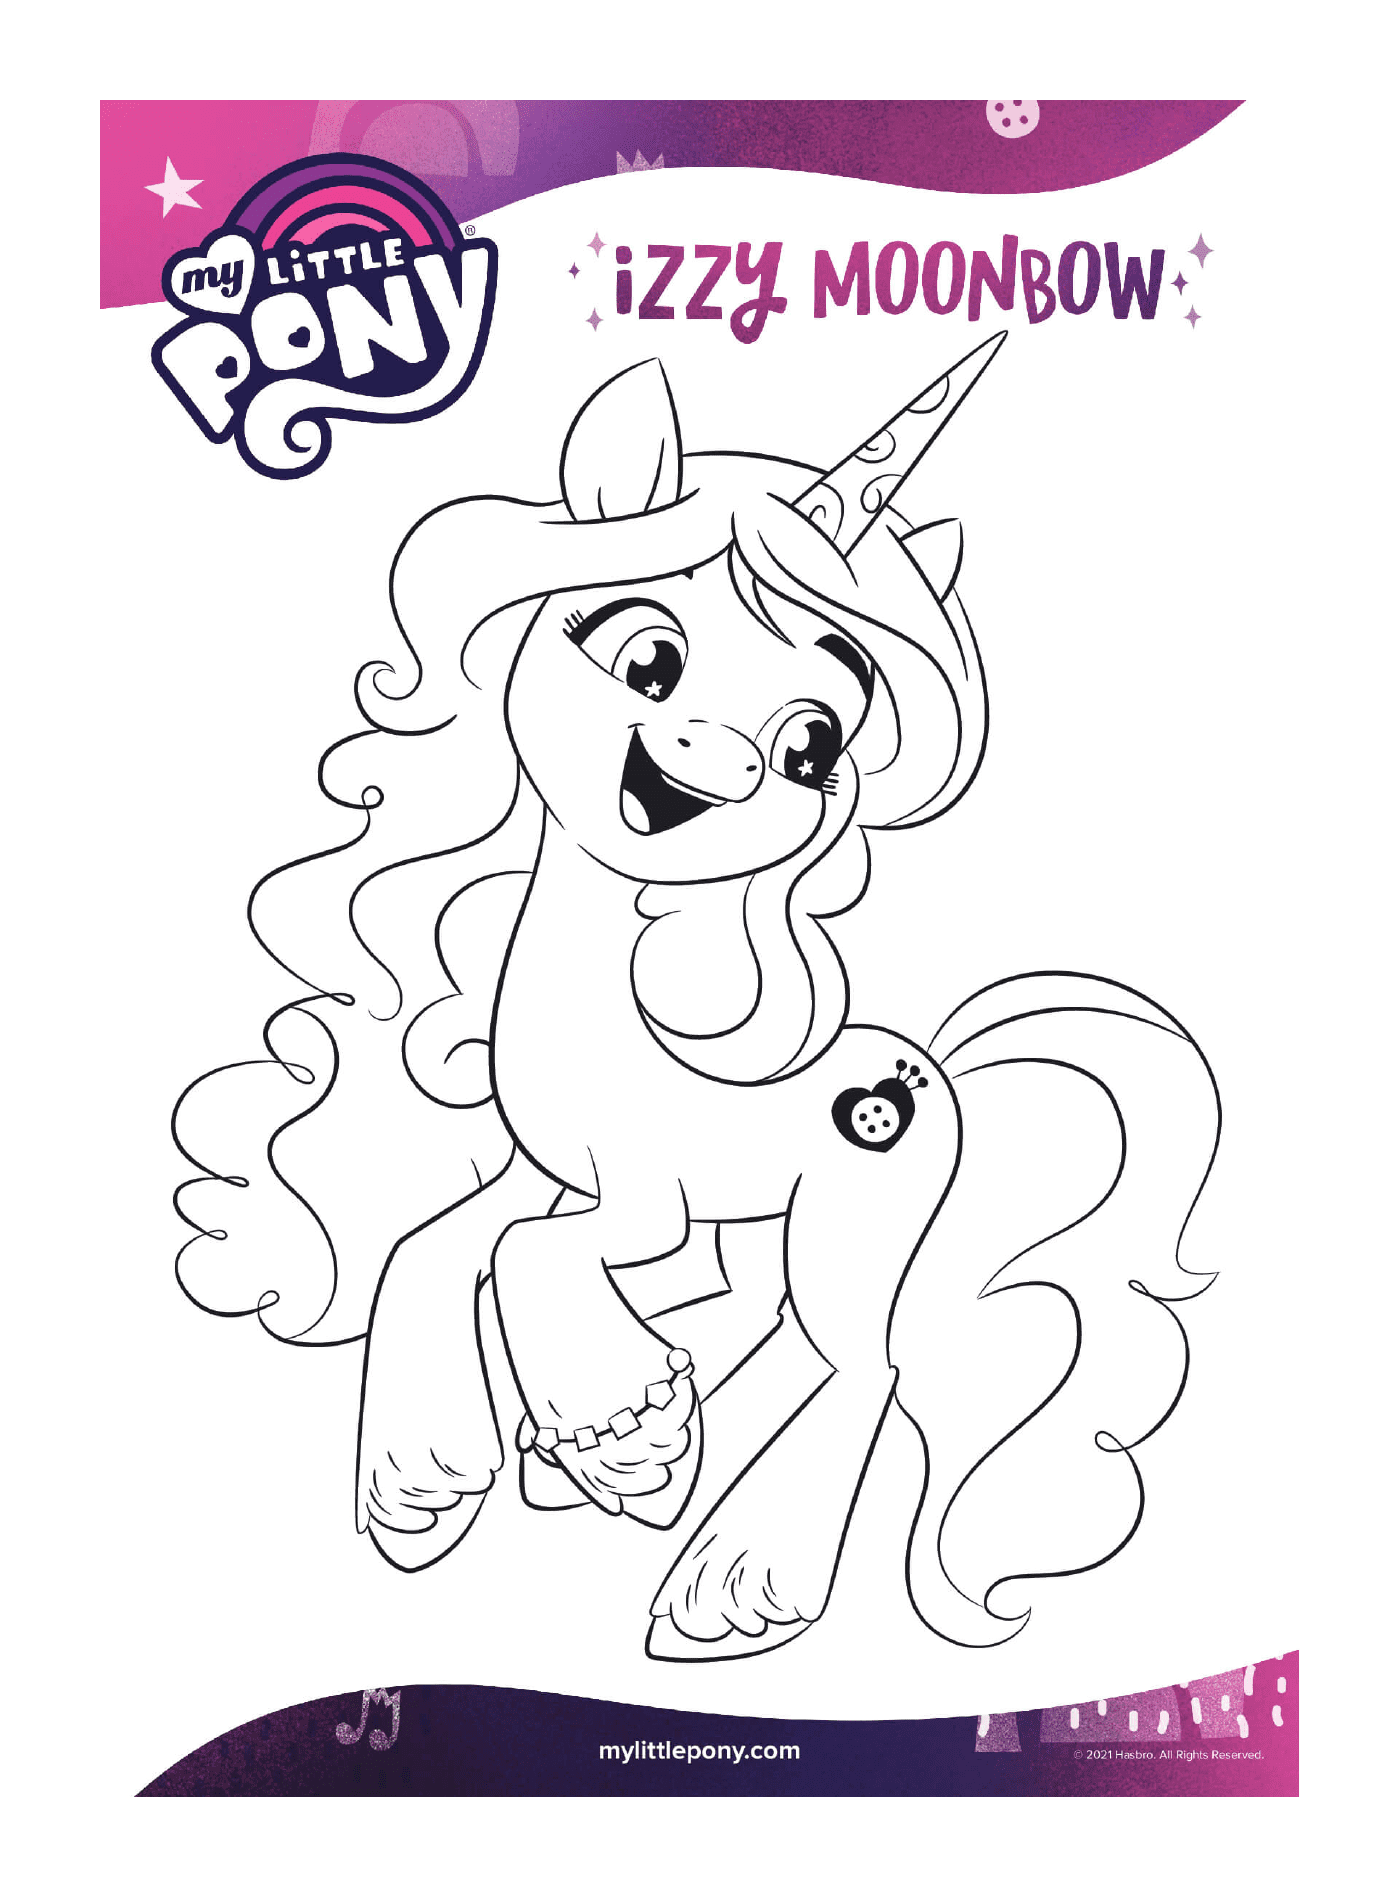  Sweet pony, full of energy 